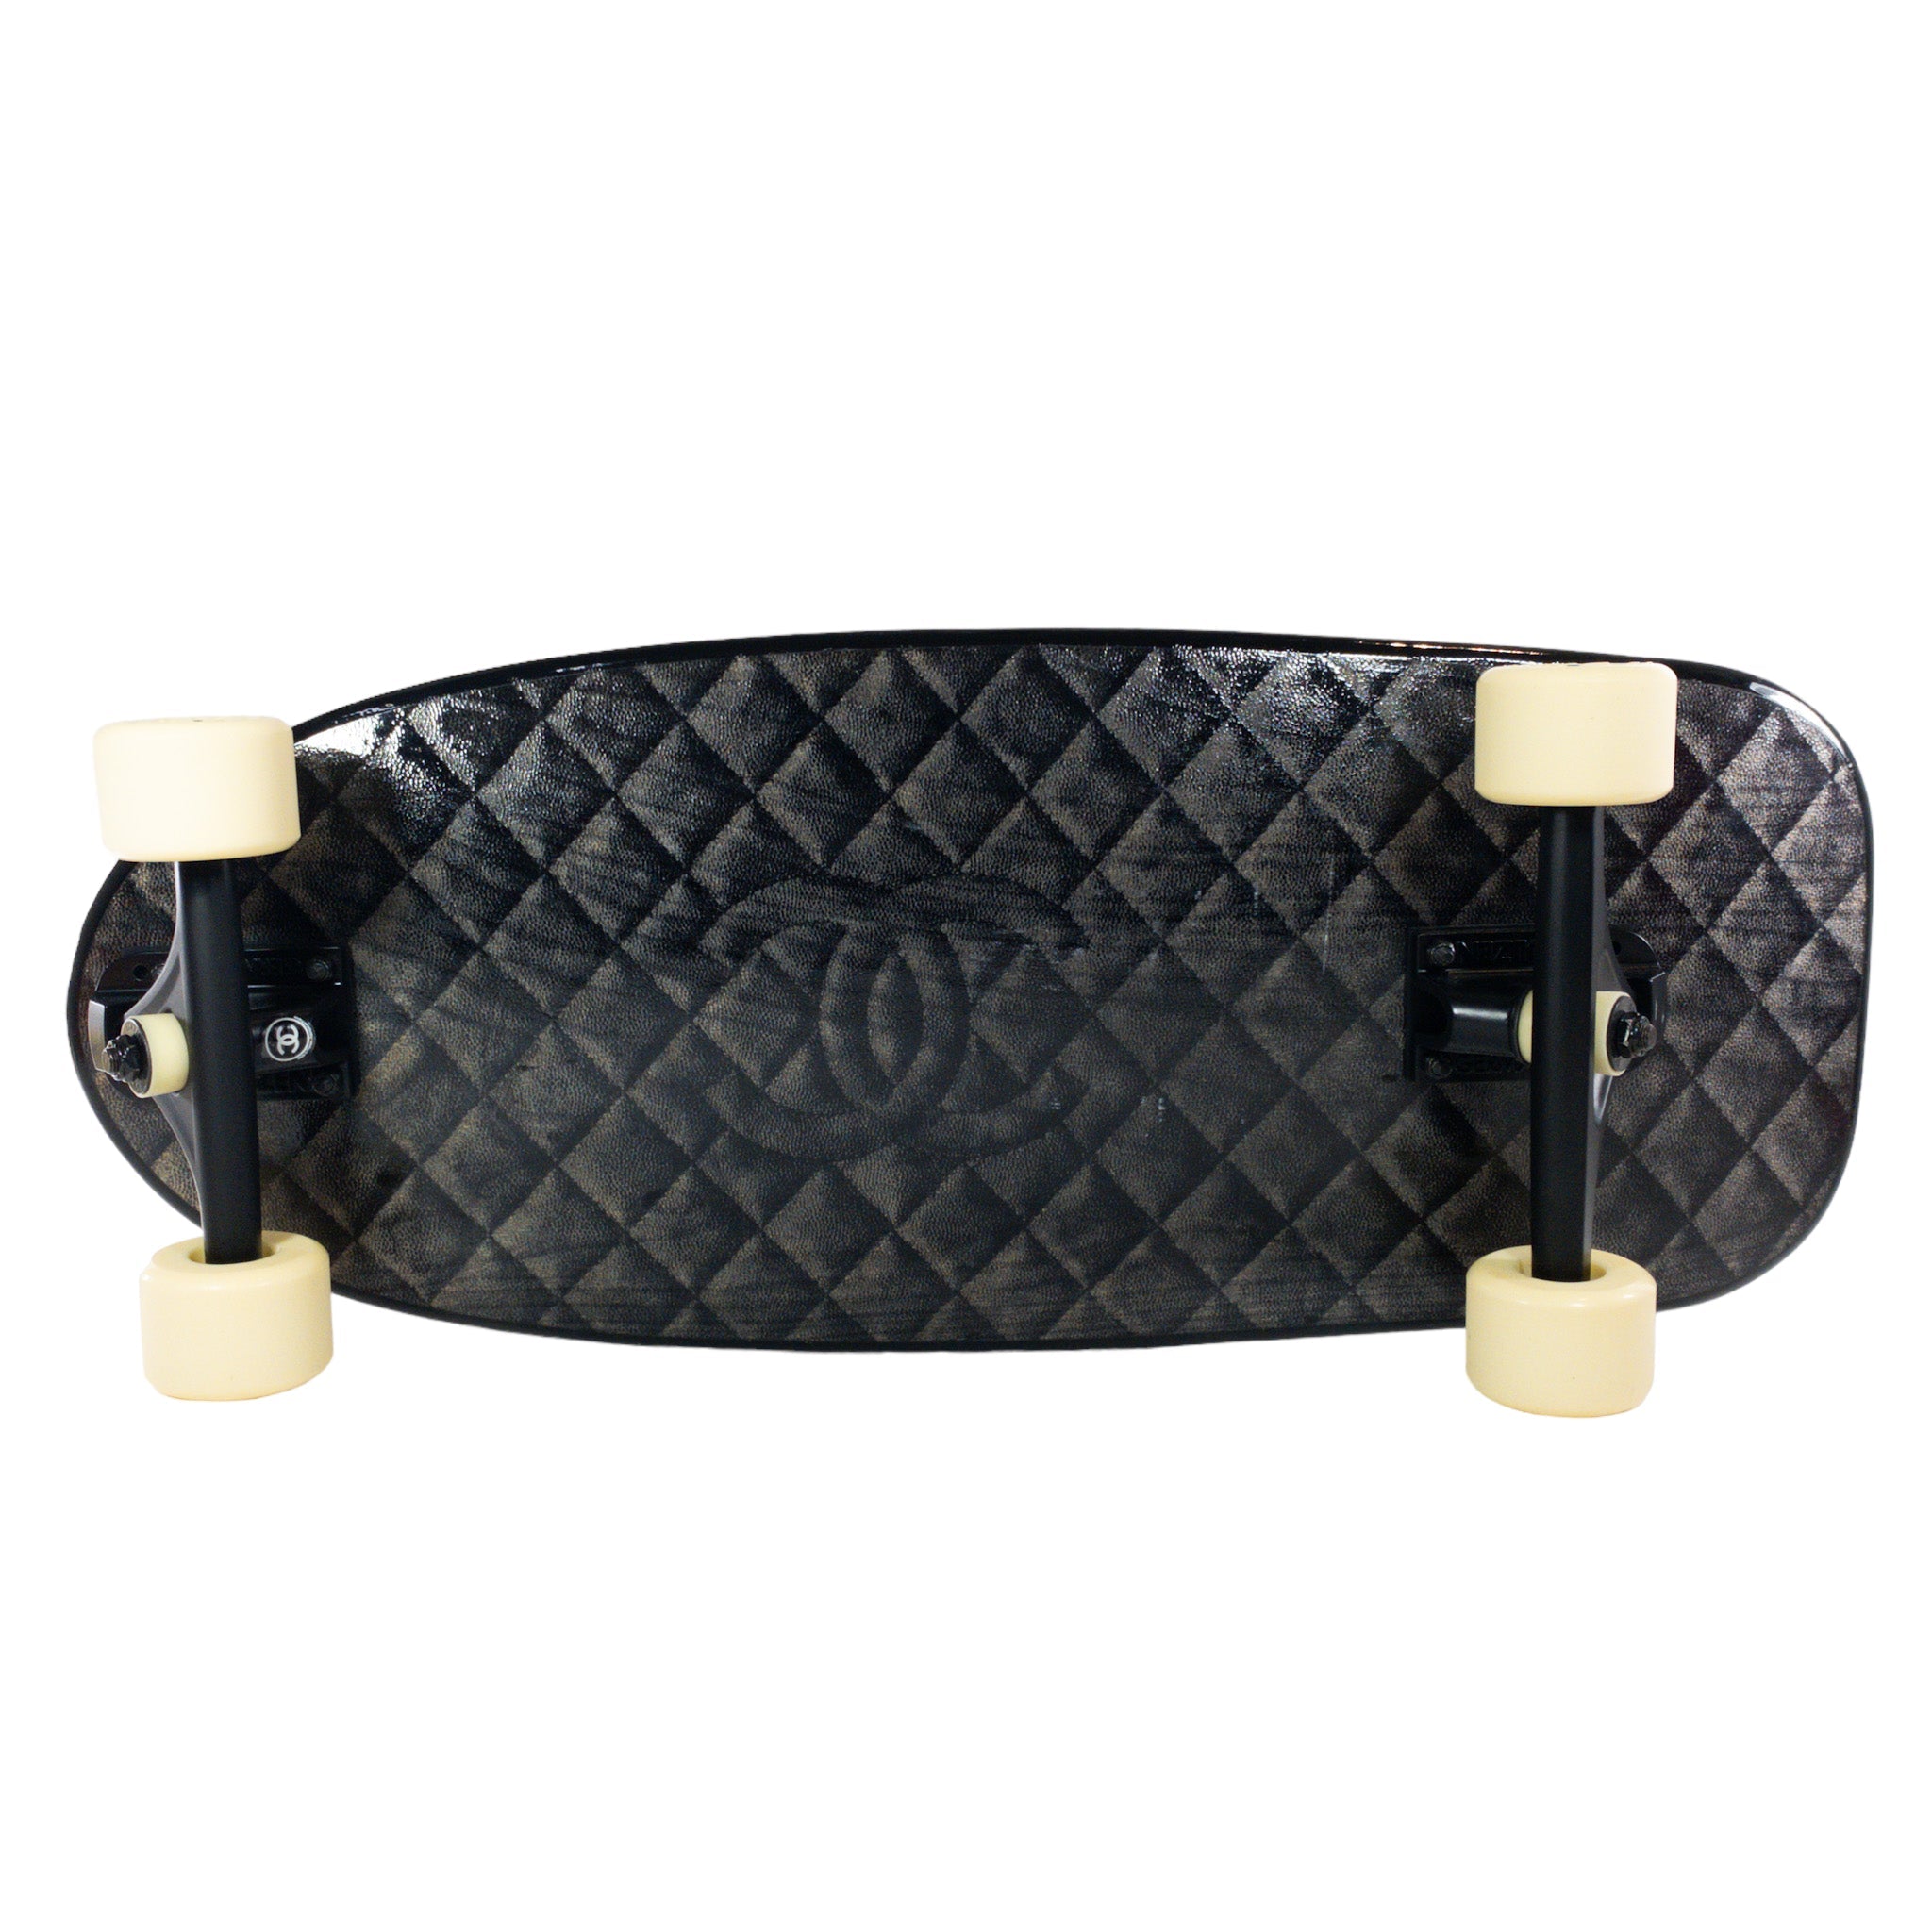 Chanel Limited Edition 2019 Skateboard